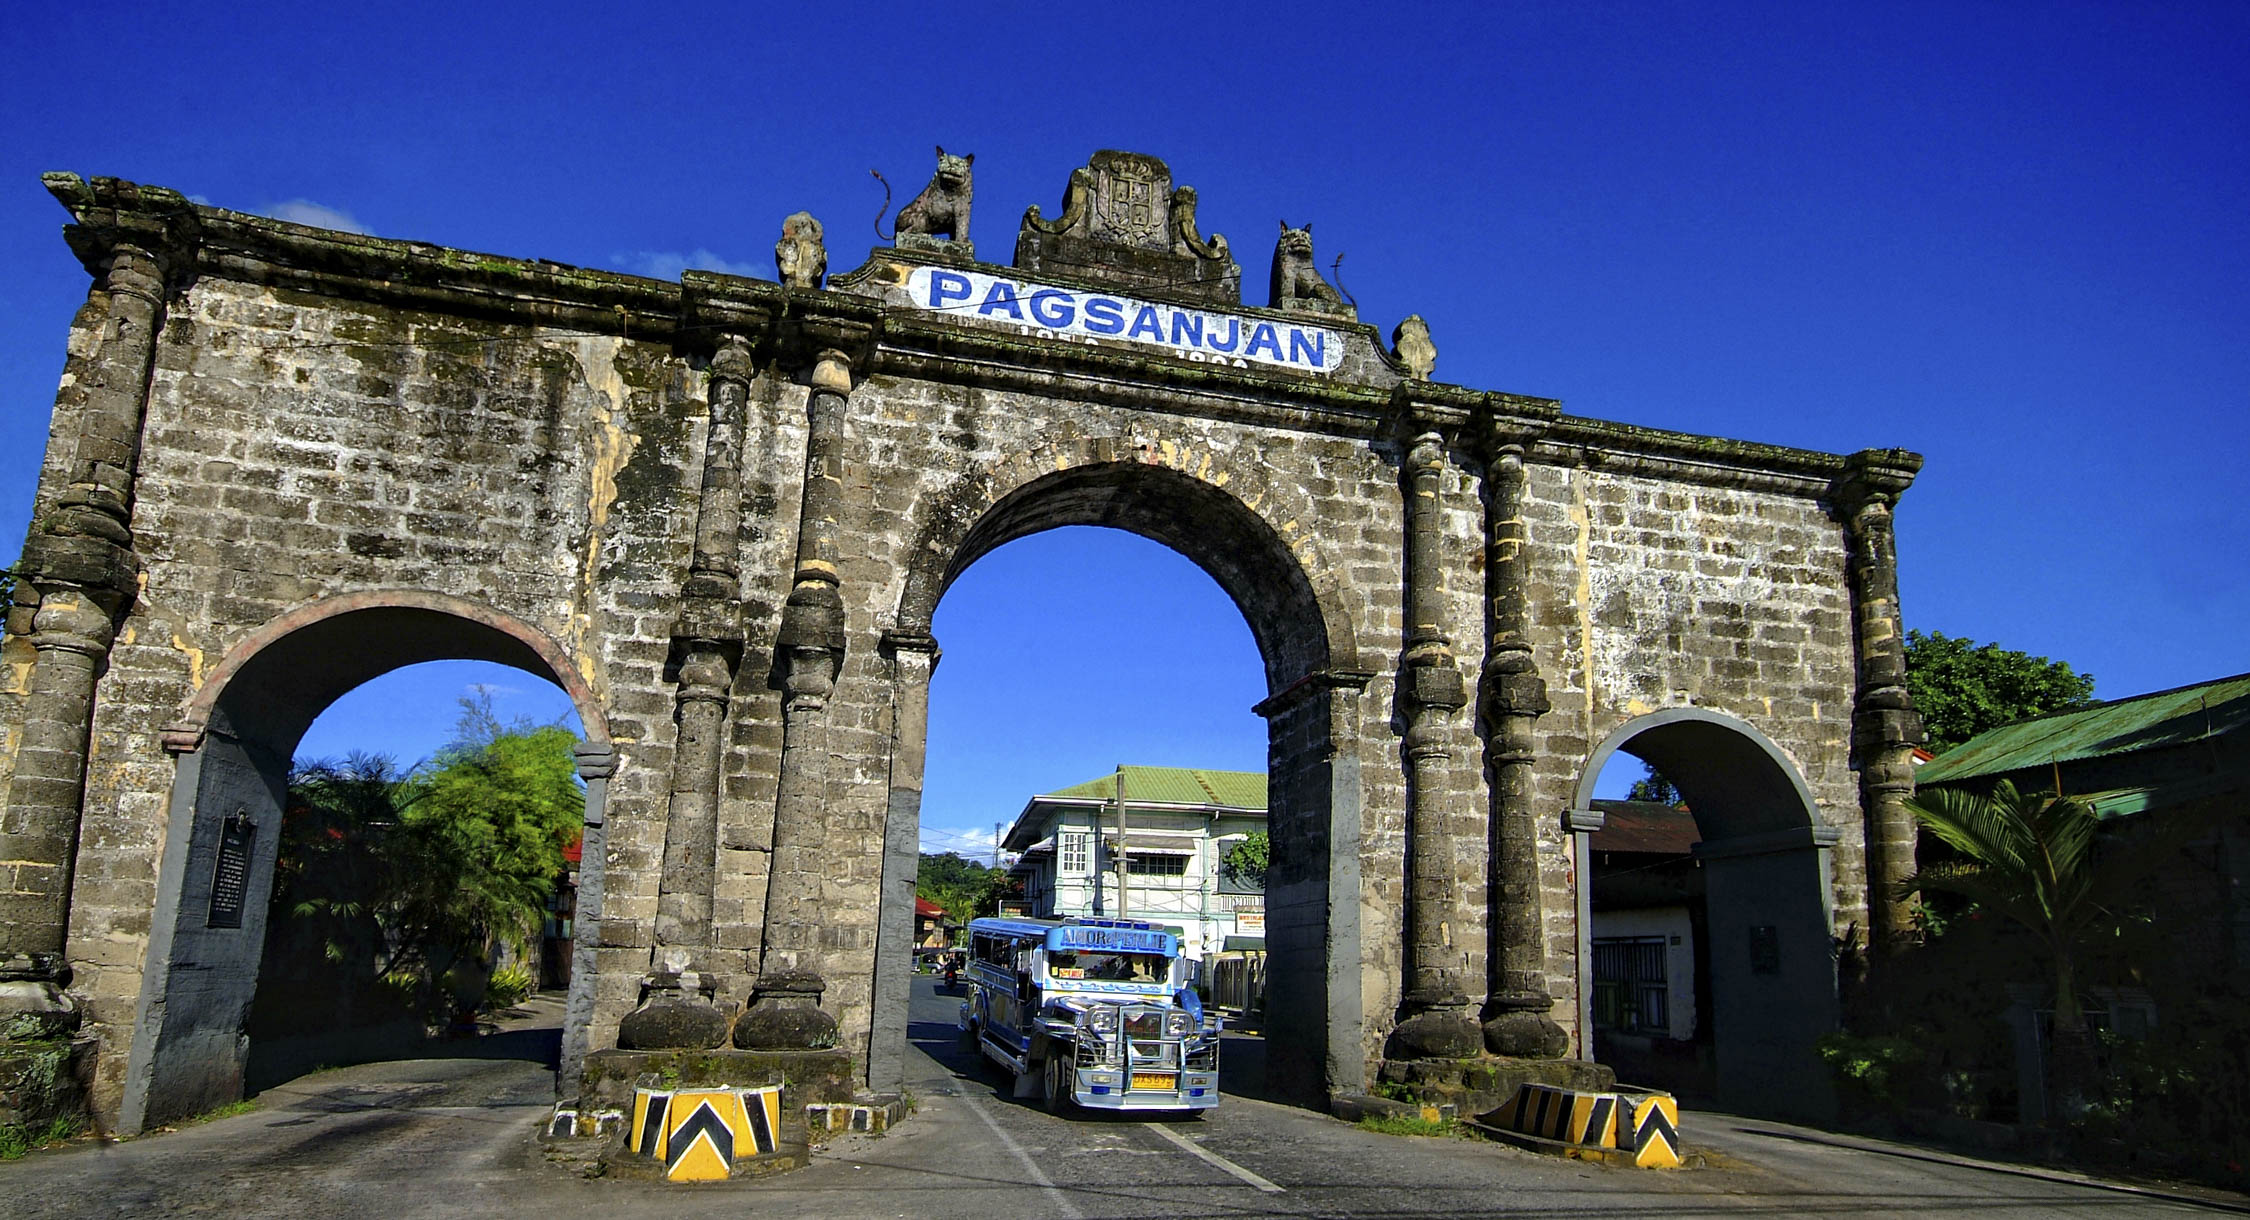 Historic arch reminds Pagsanjan of glorious days